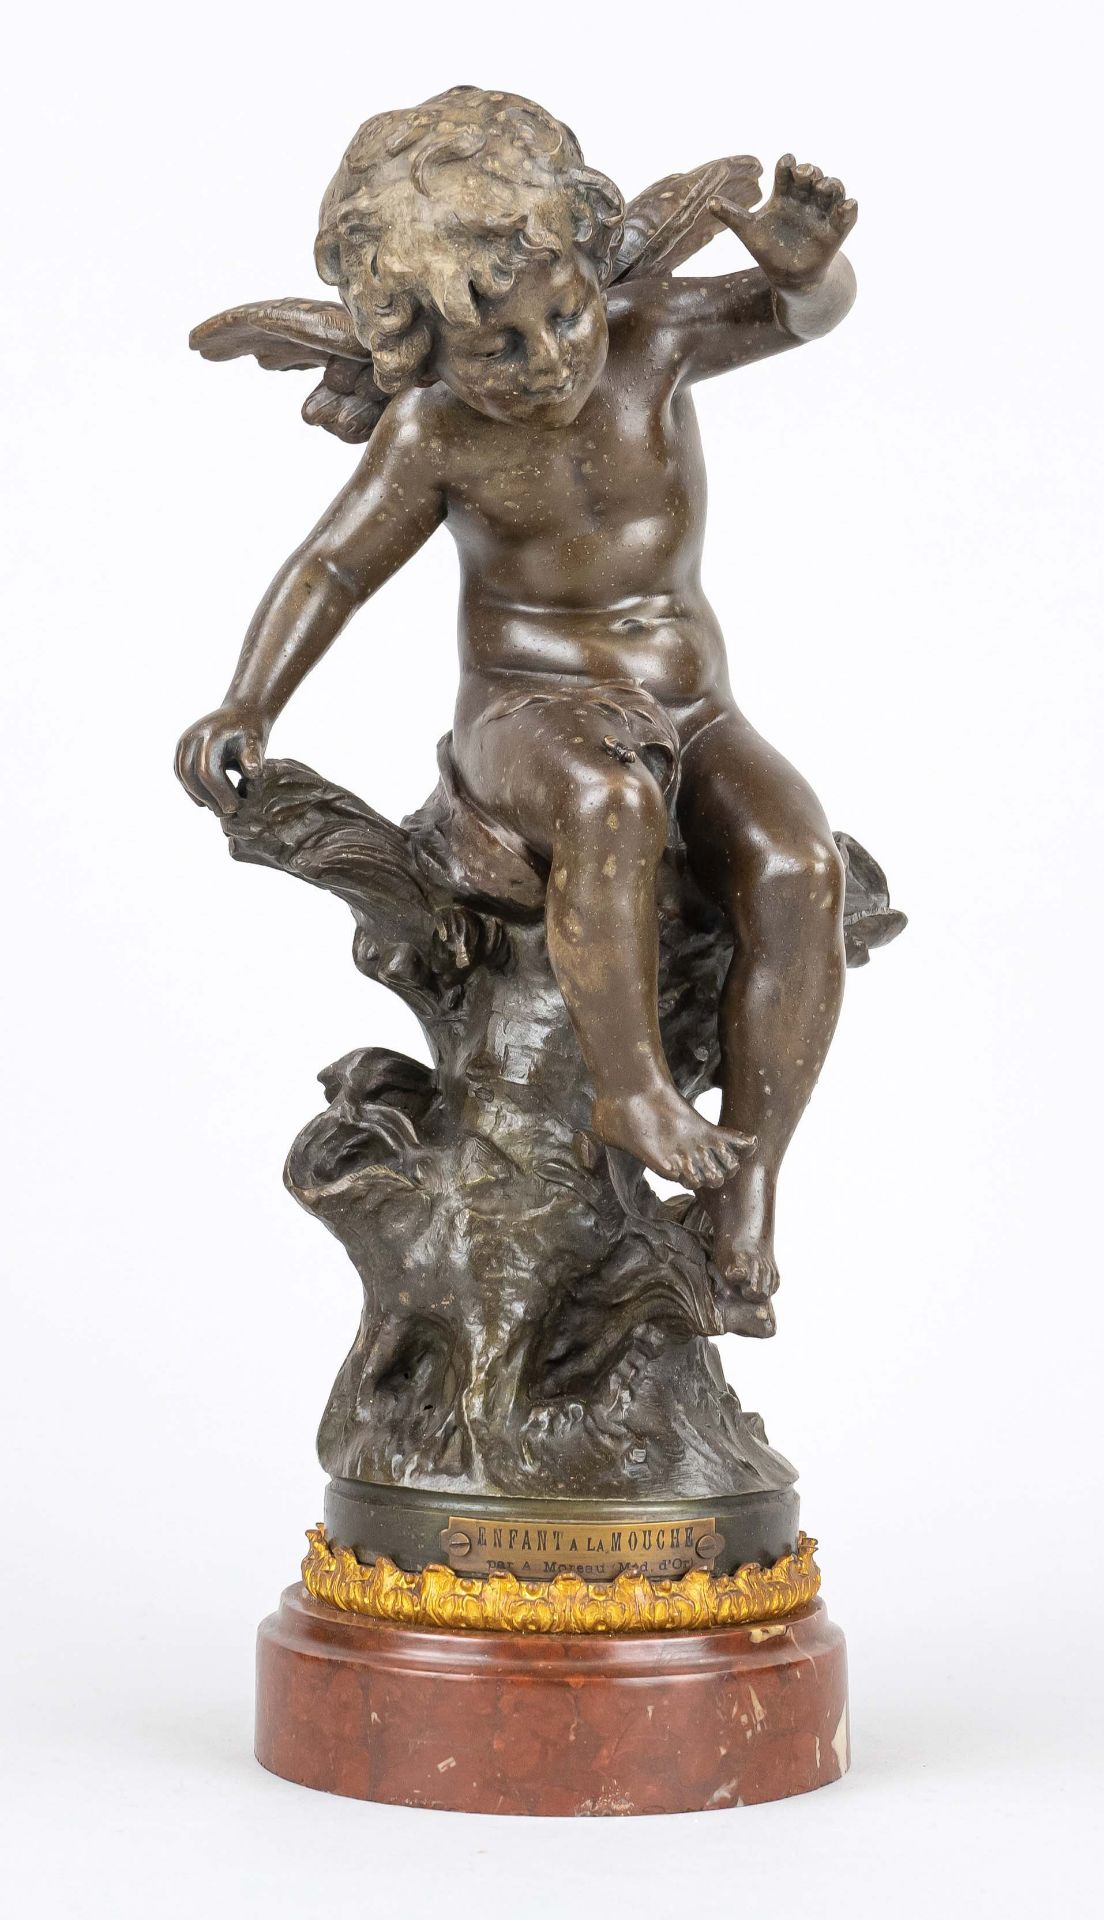 Auguste Moreau (1834-1917), after, ''Enfant à la Mouche'', cupid with caterpillar on the knee, brown